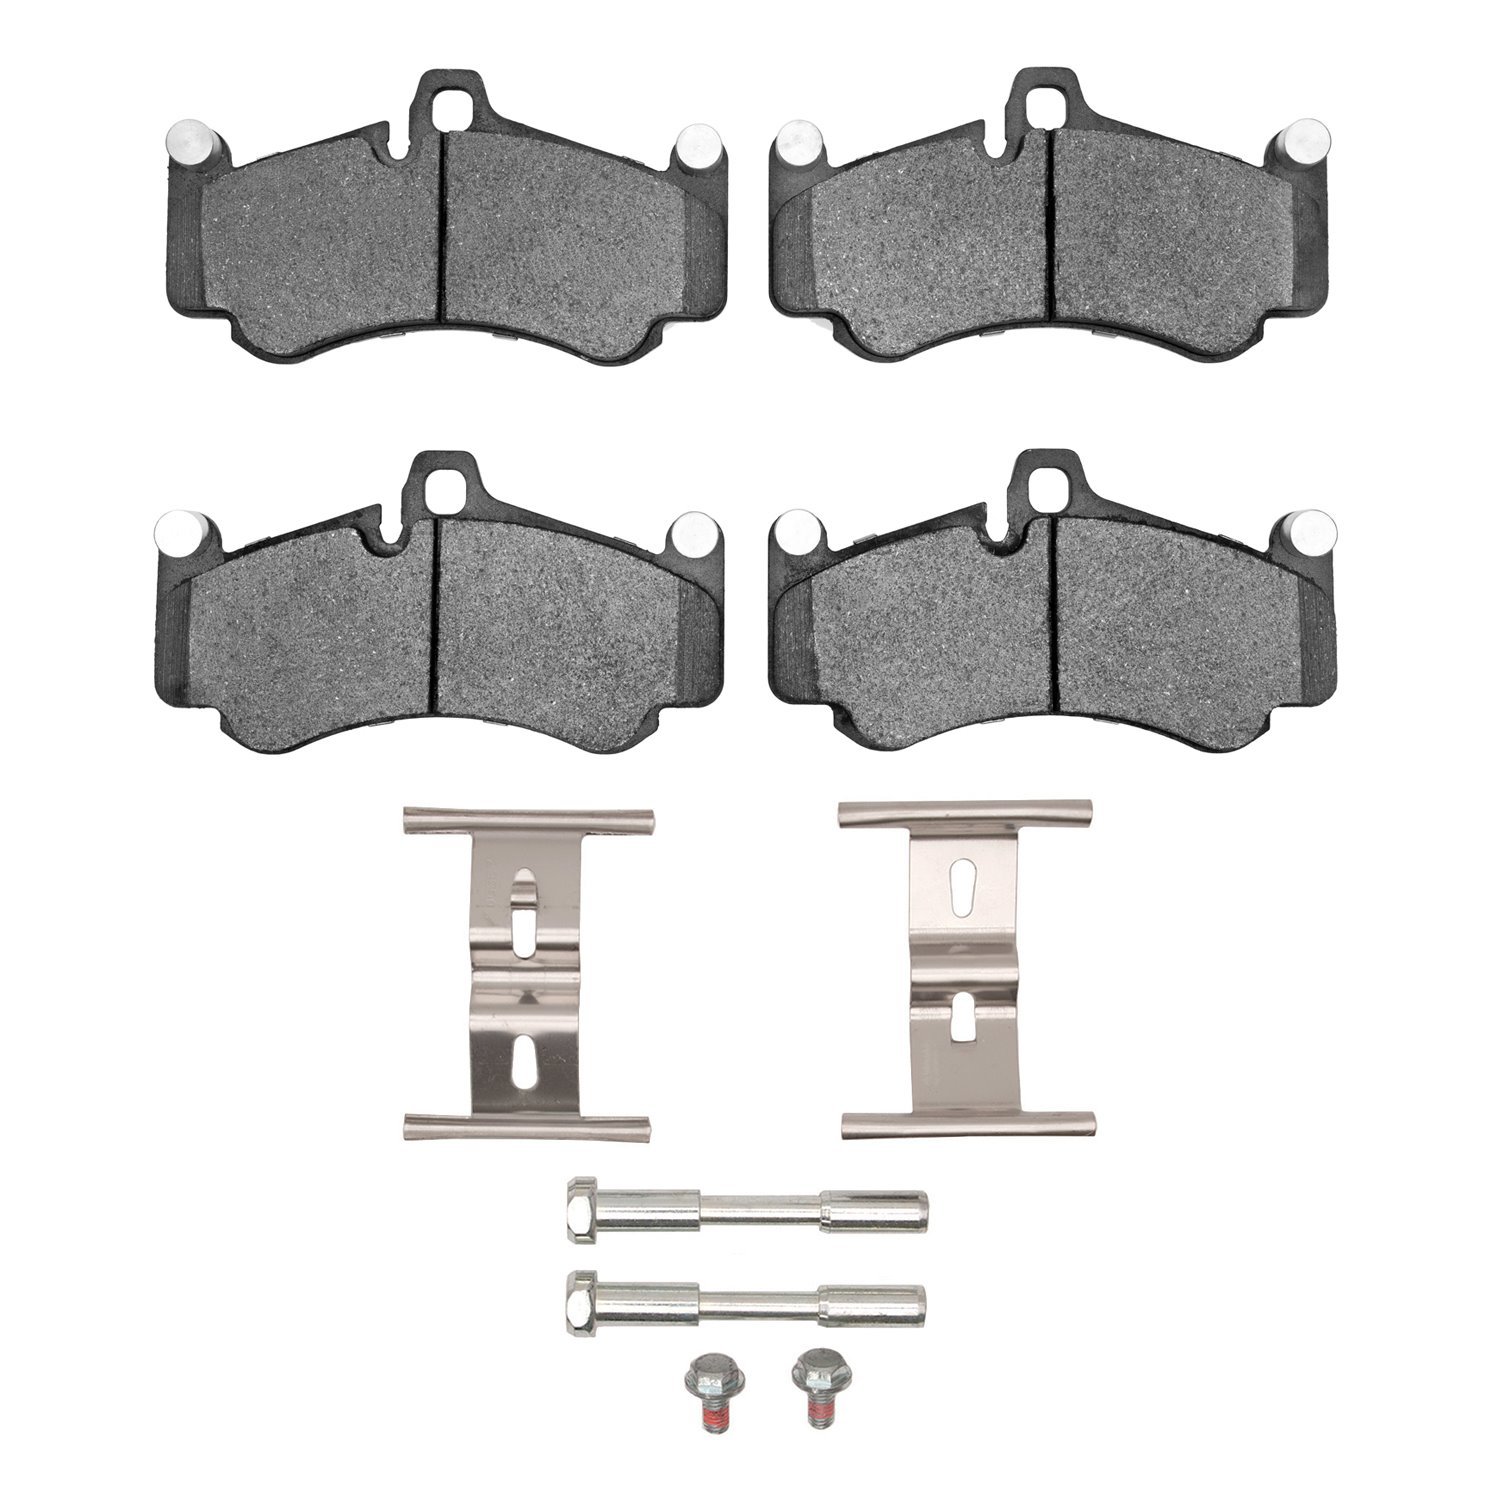 1551-0991-01 5000 Advanced Low-Metallic Brake Pads & Hardware Kit, 2002-2013 Porsche, Position: Front,Rear